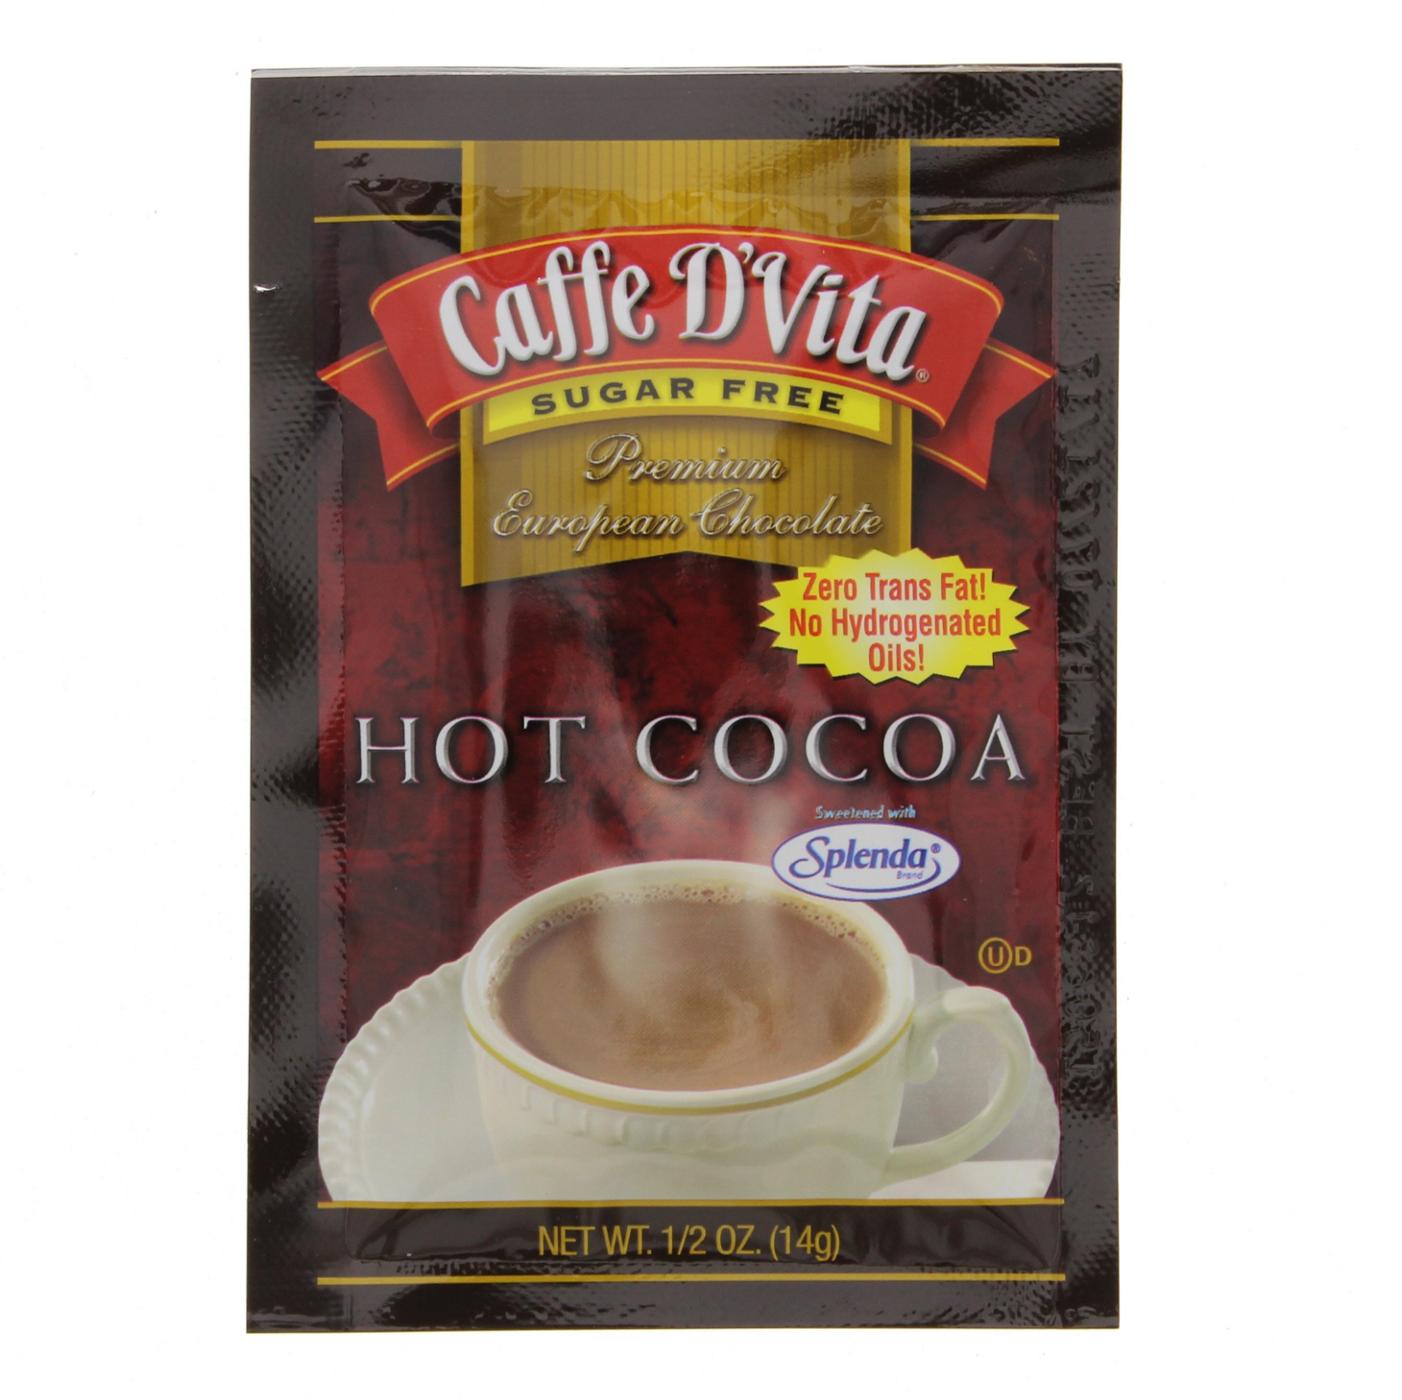 Caffe D'Vita Sugar Free Hot Cocoa Envelope; image 1 of 2